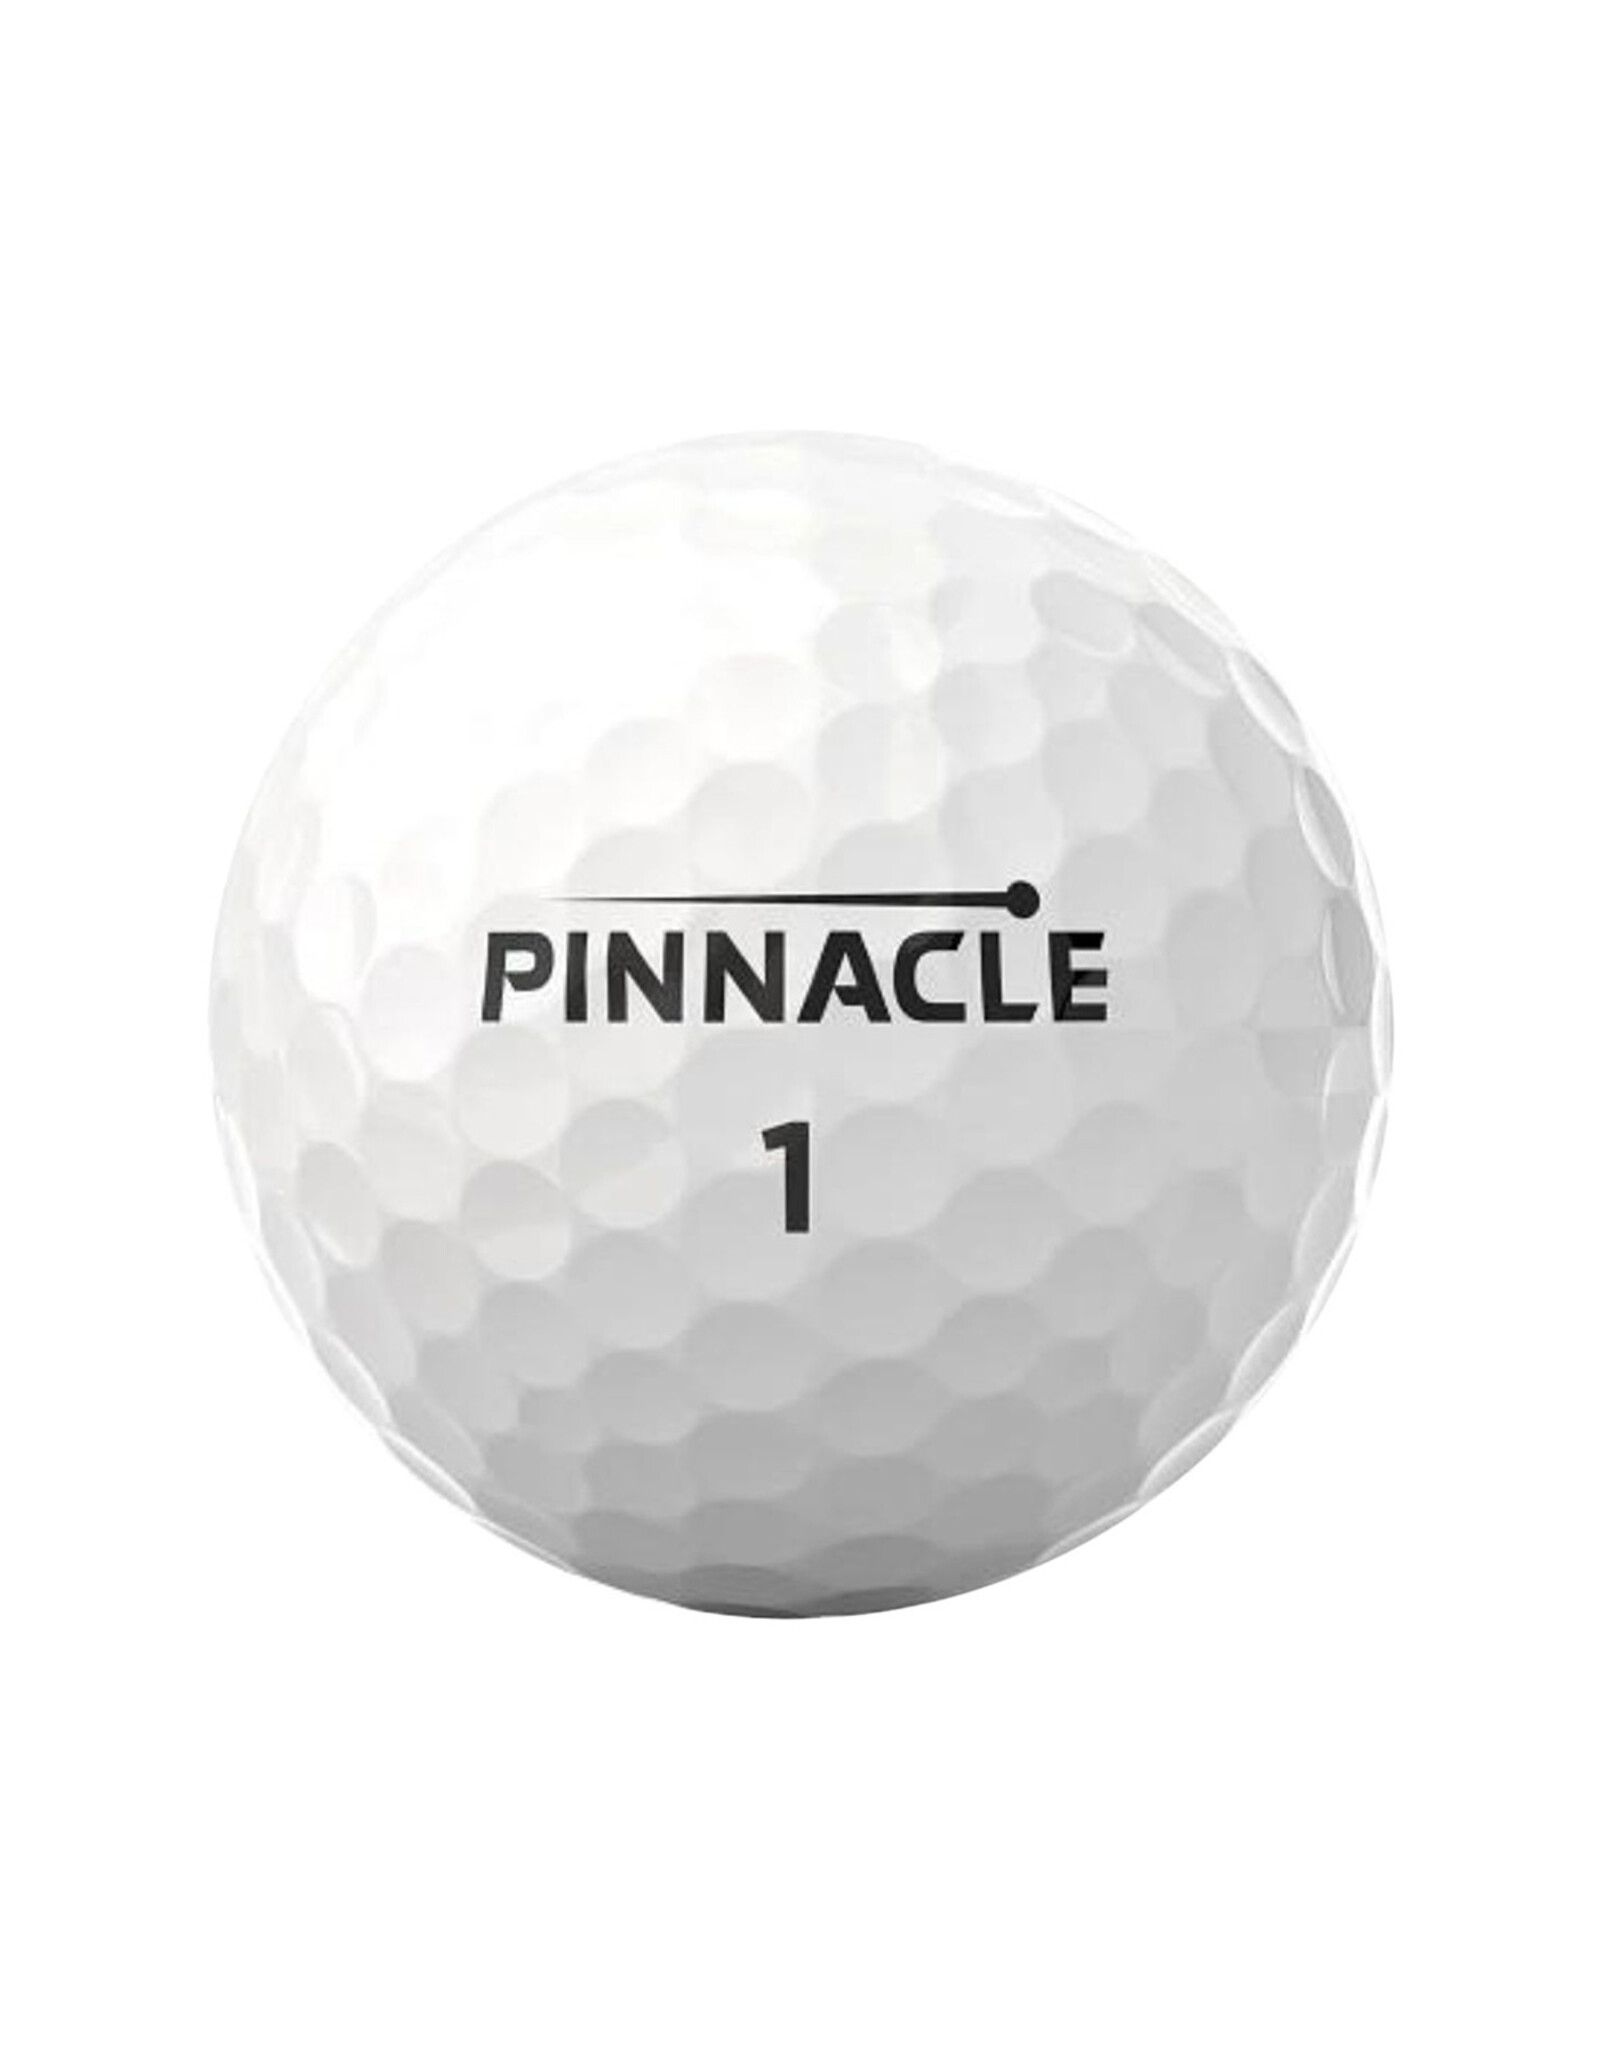 Pinnacle Soft 15-Pack